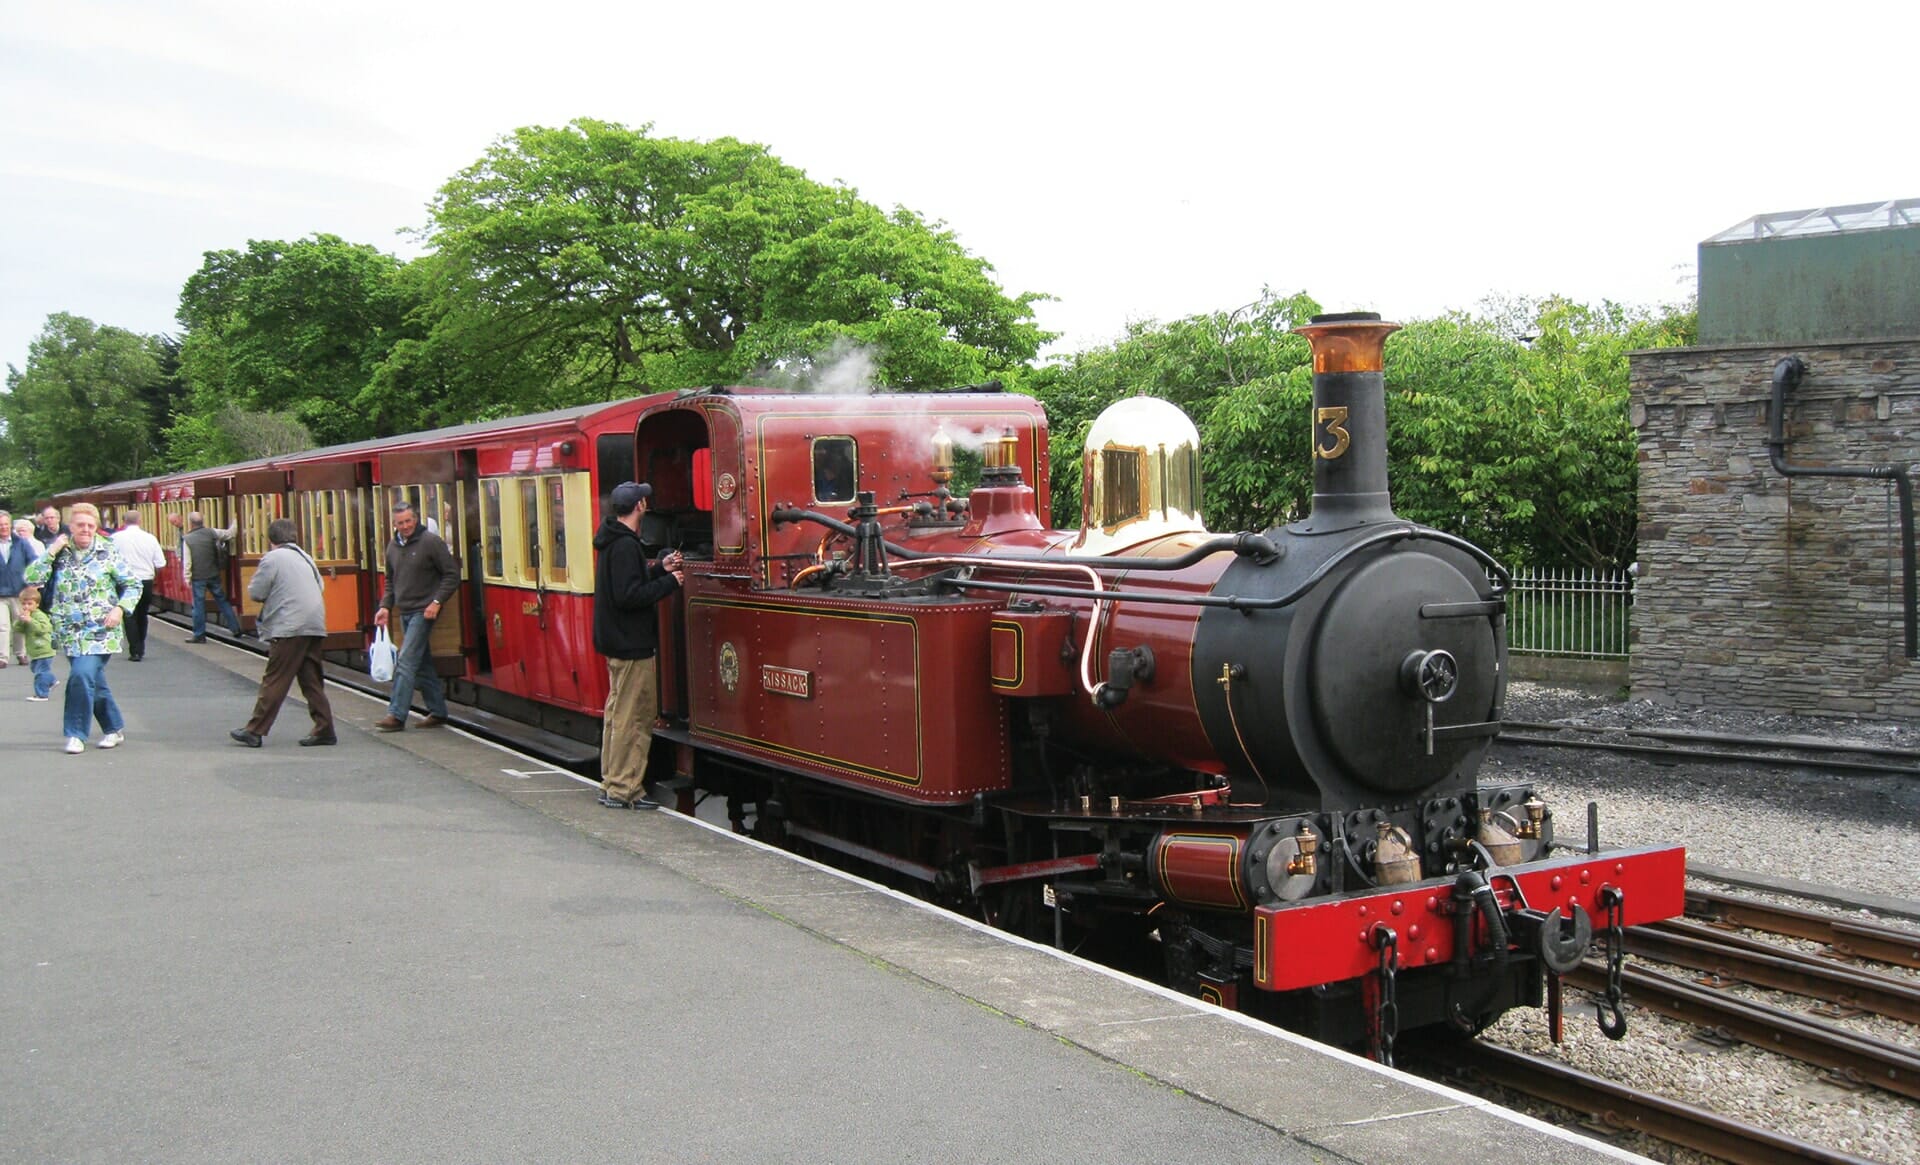 Isle of Man Railway Holiday featured